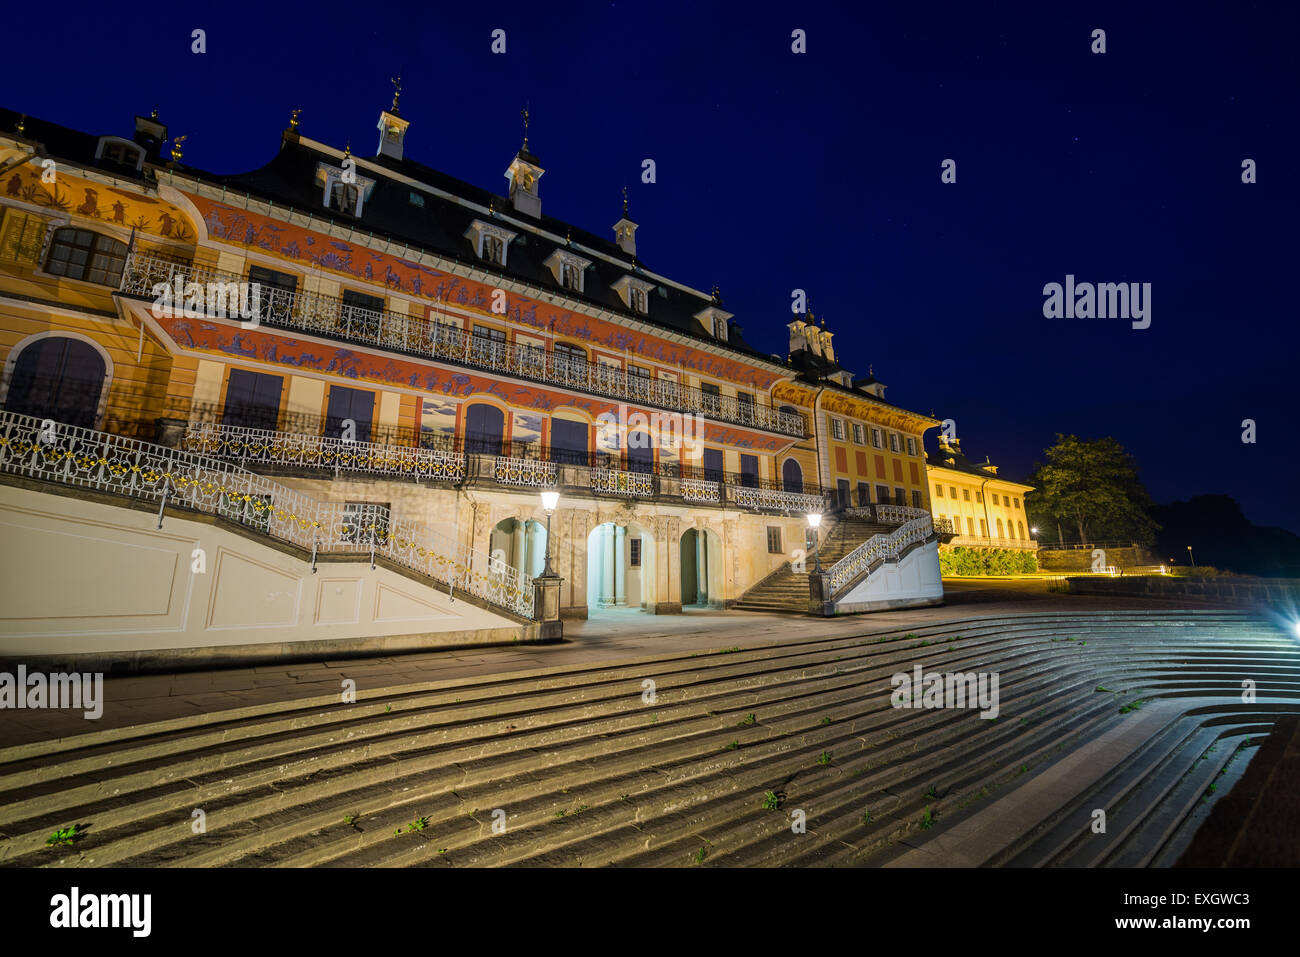 Baroque Schloss Pillnitz Castle at night, Dresden, Saxony, Germany, Europe Stock Photo